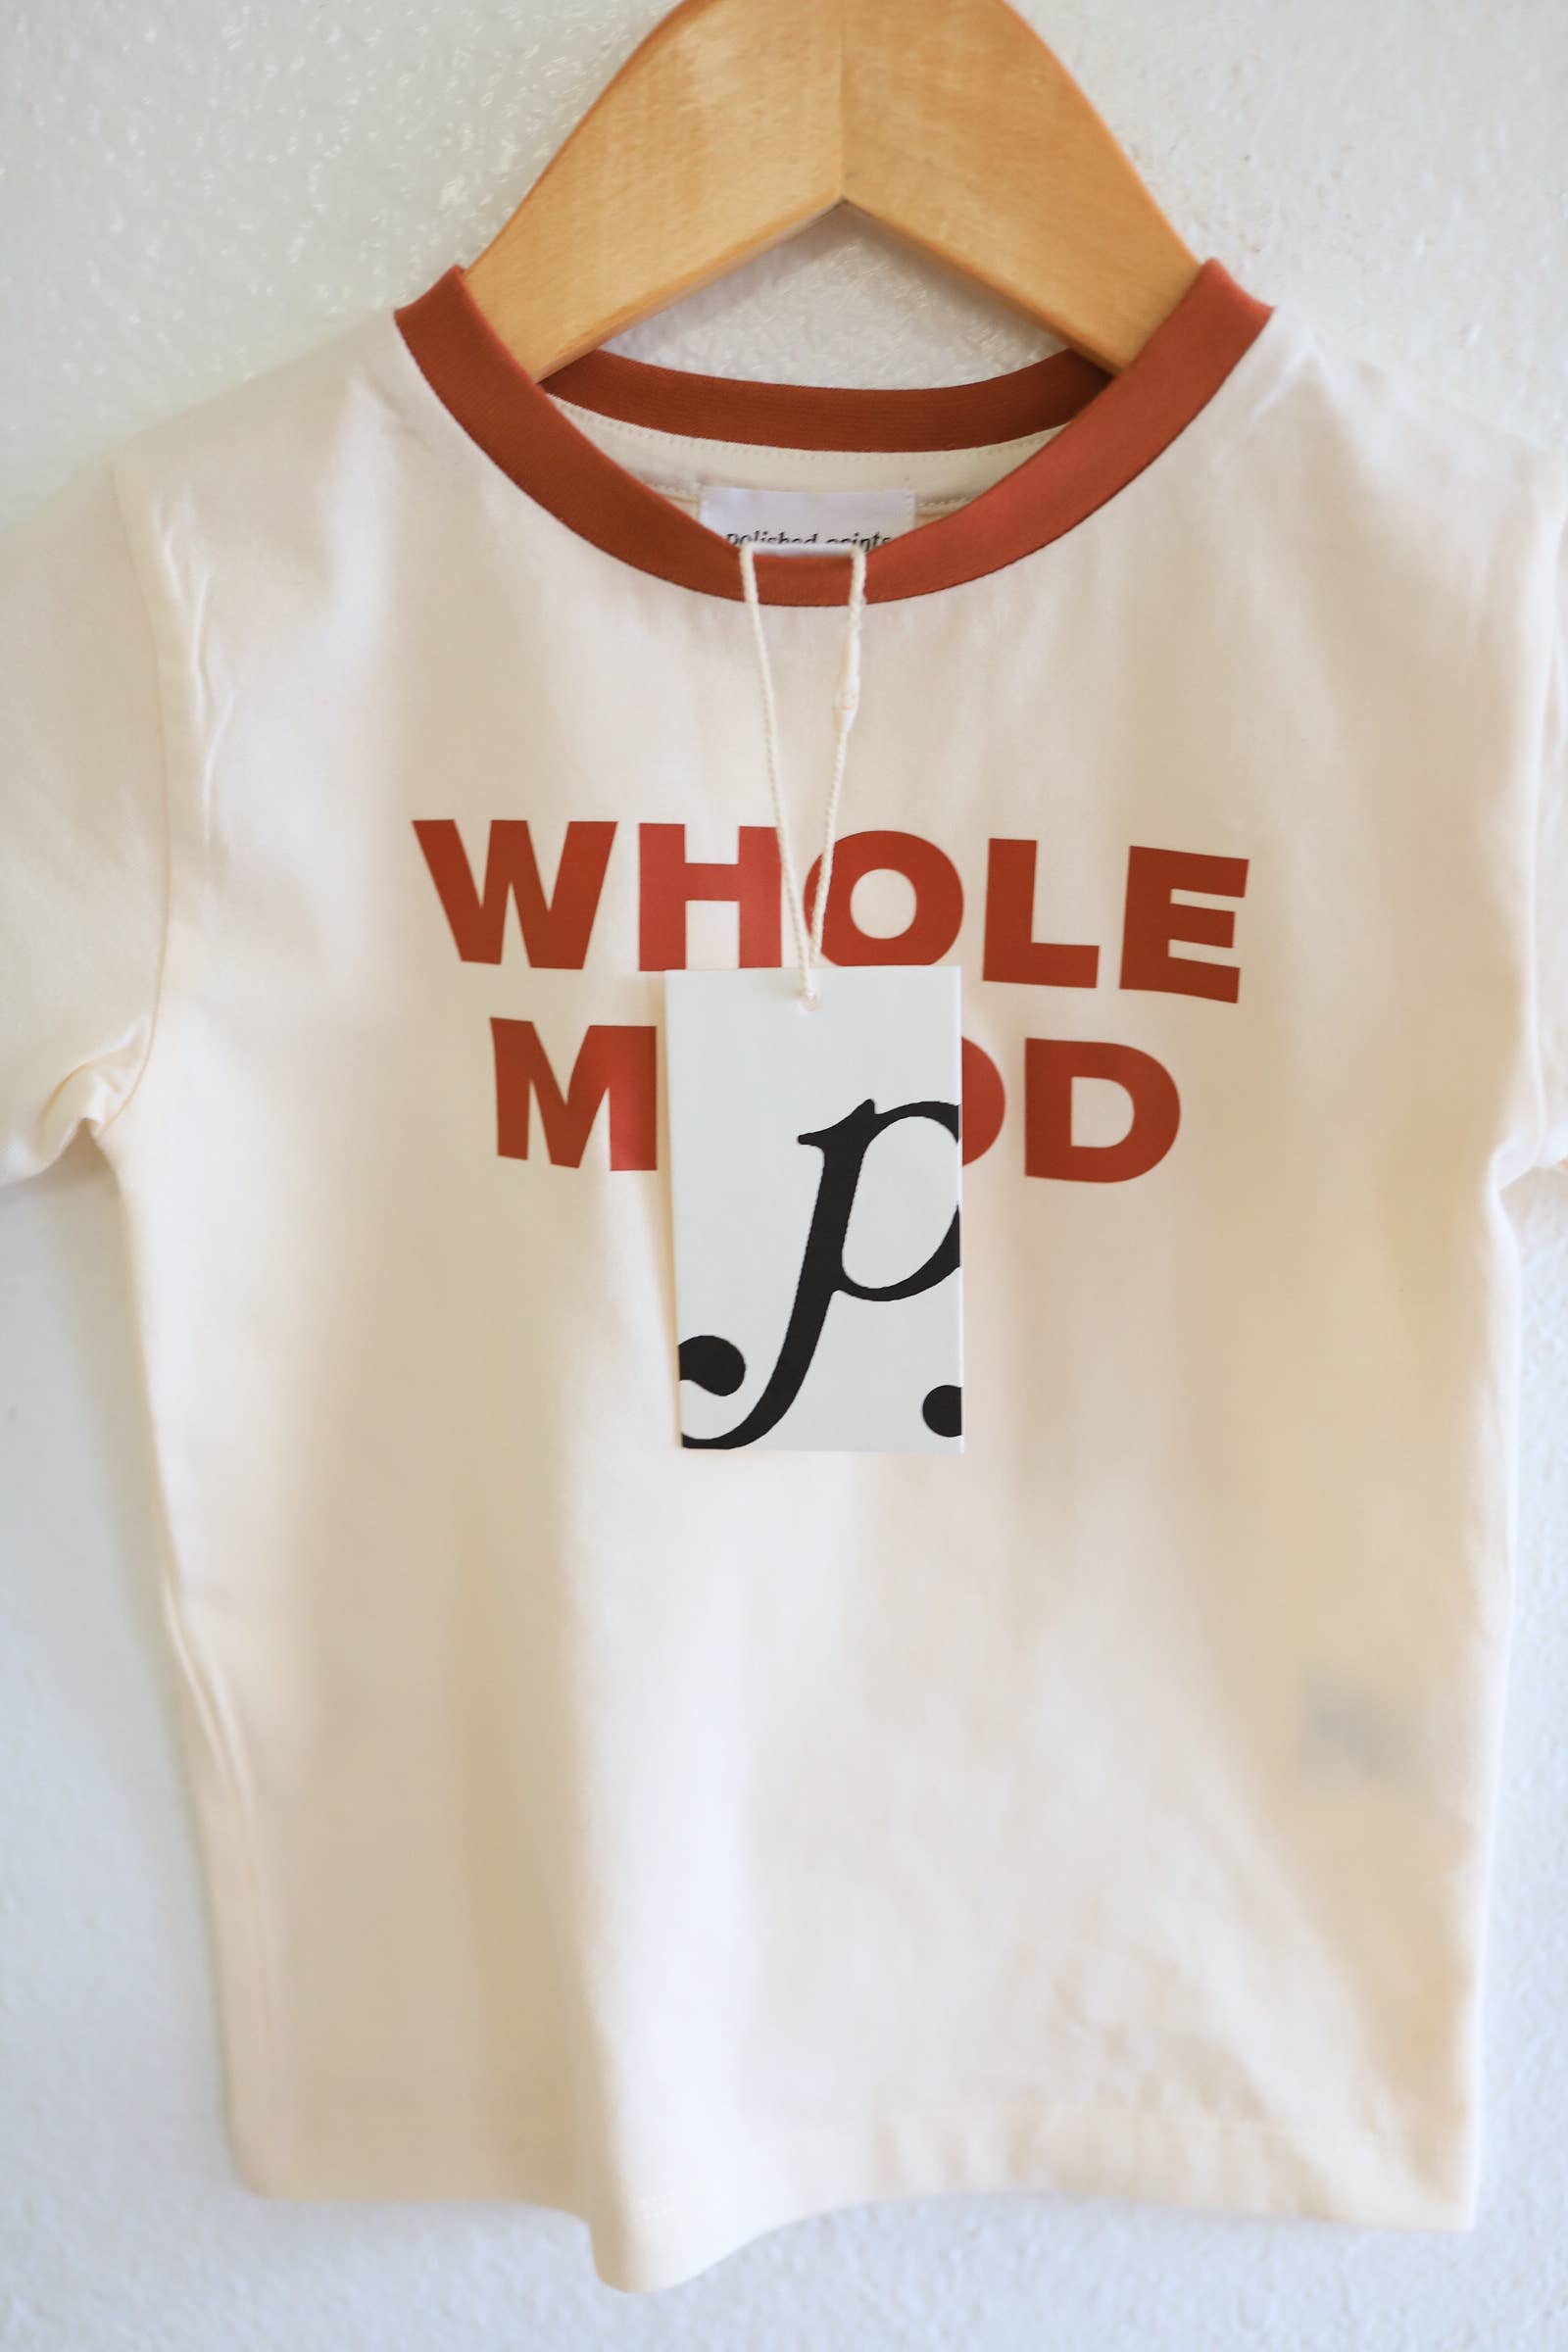 Polished Prints - Whole Mood Kids Ringer T-Shirt, boys clothing, kids clothes